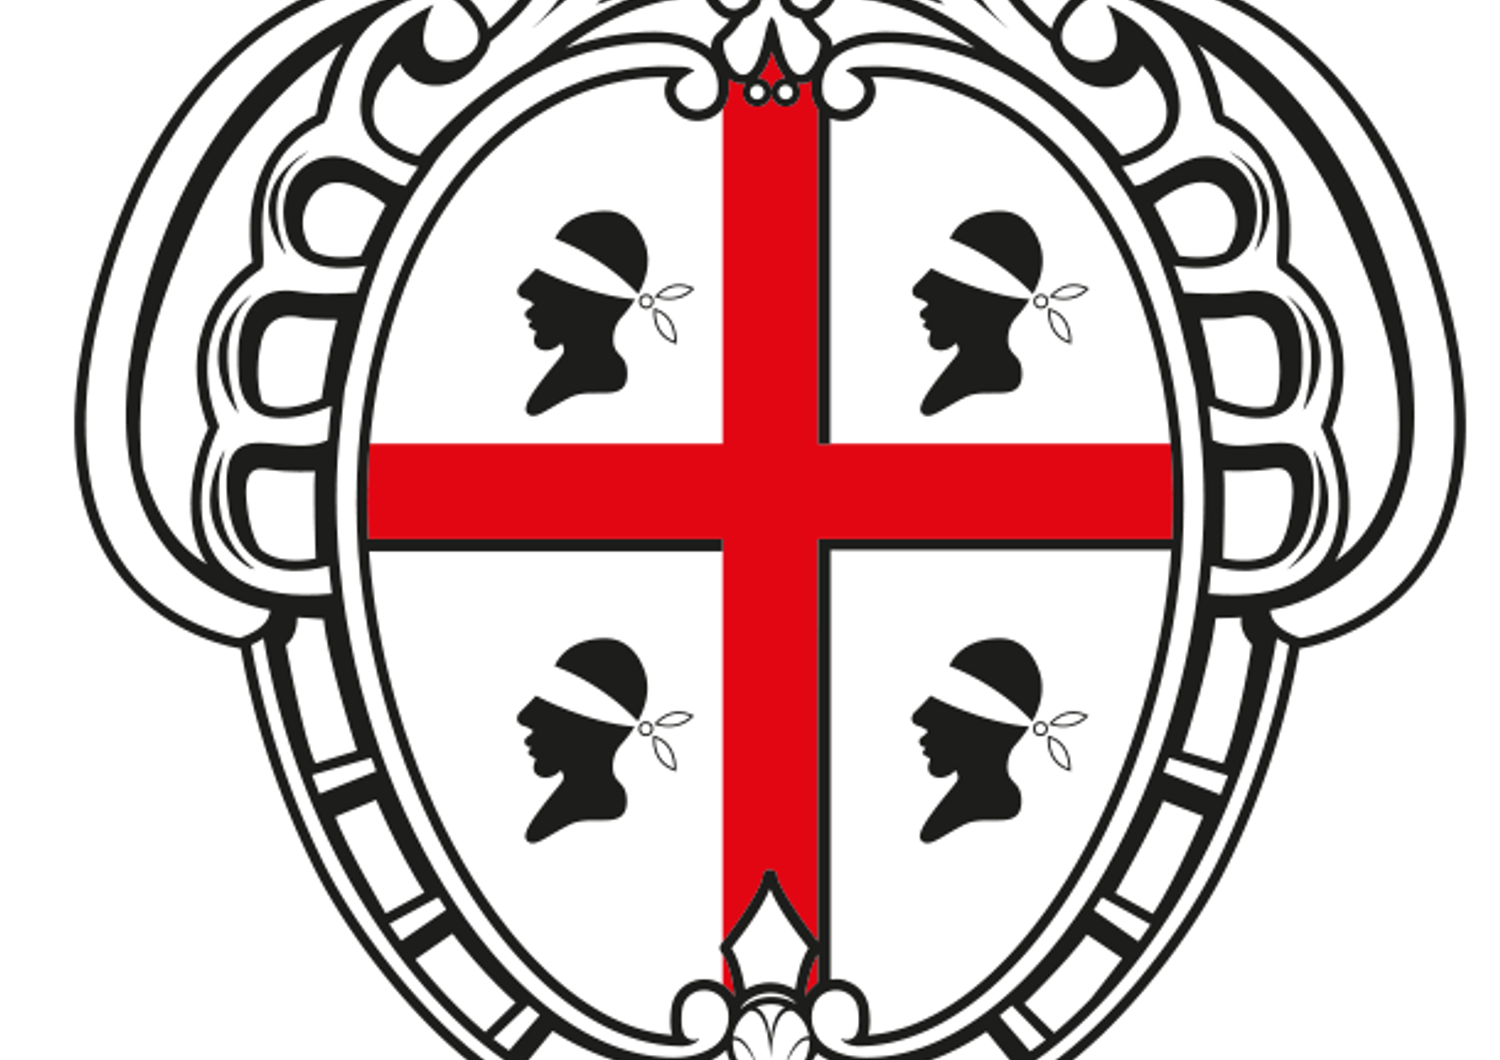 &nbsp;Regione Sardegna stemma logo - sito